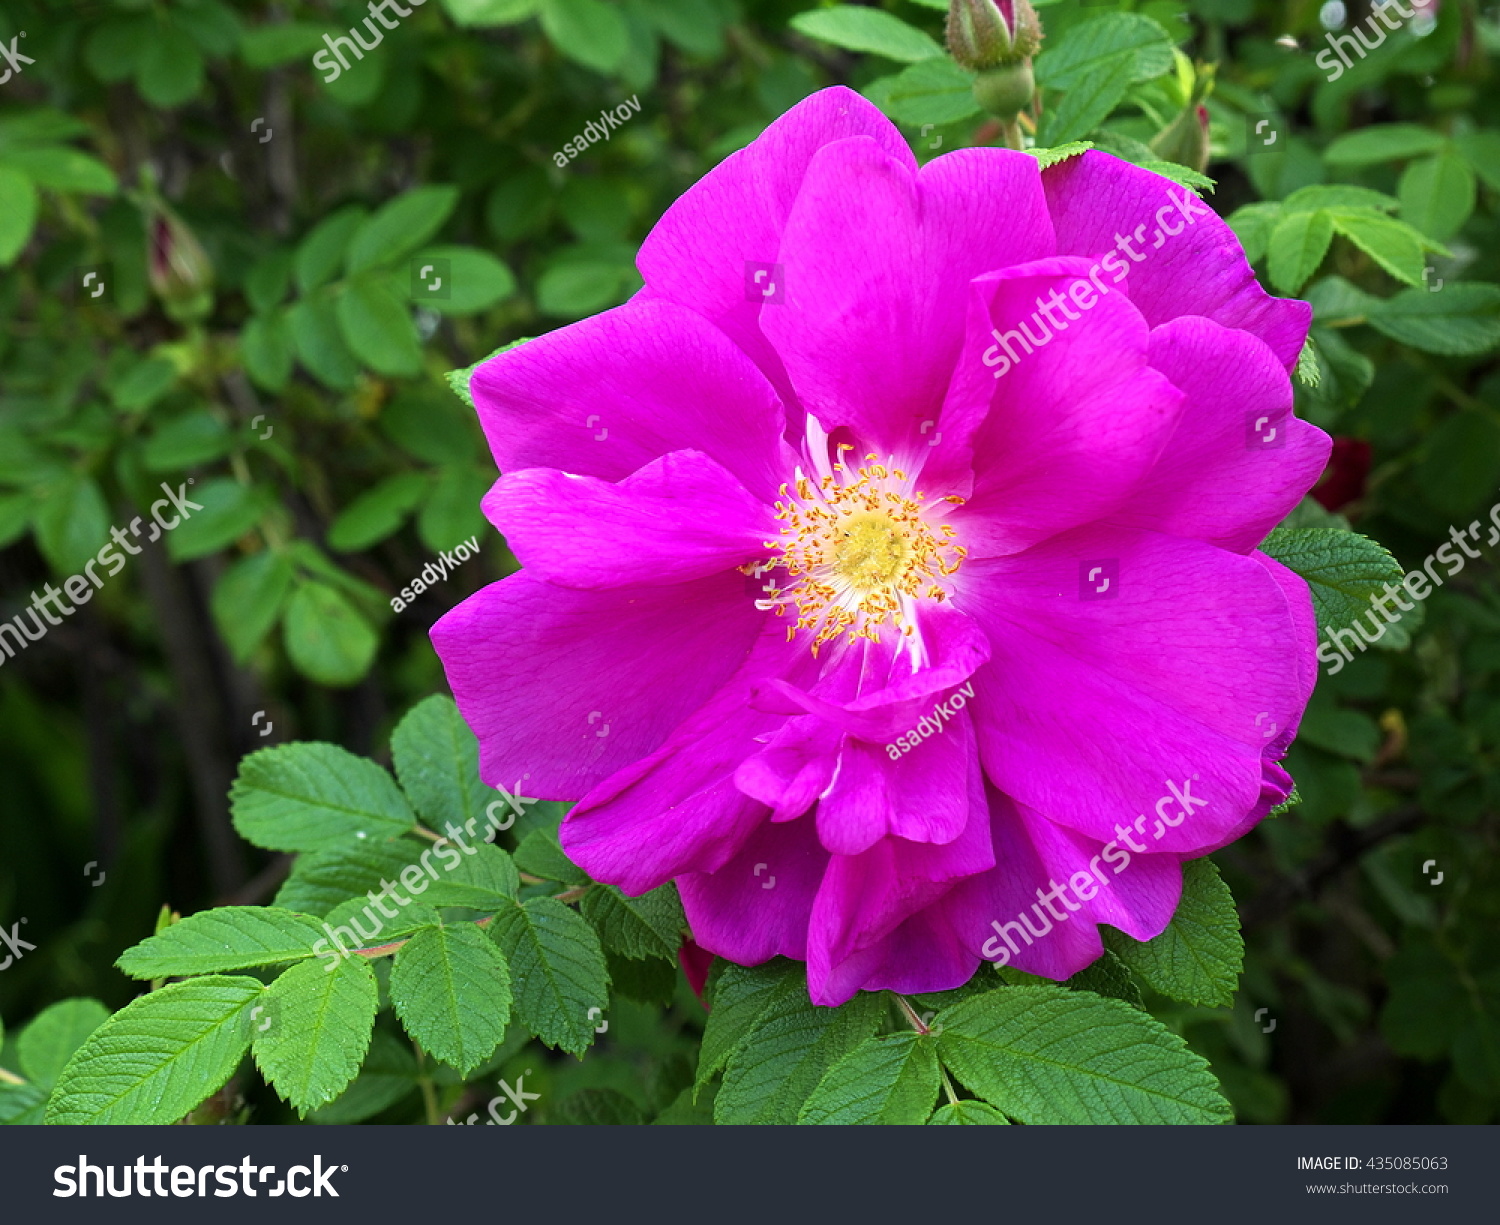 Wild Rose Flower Stock Photo 435085063 : Shutterstock